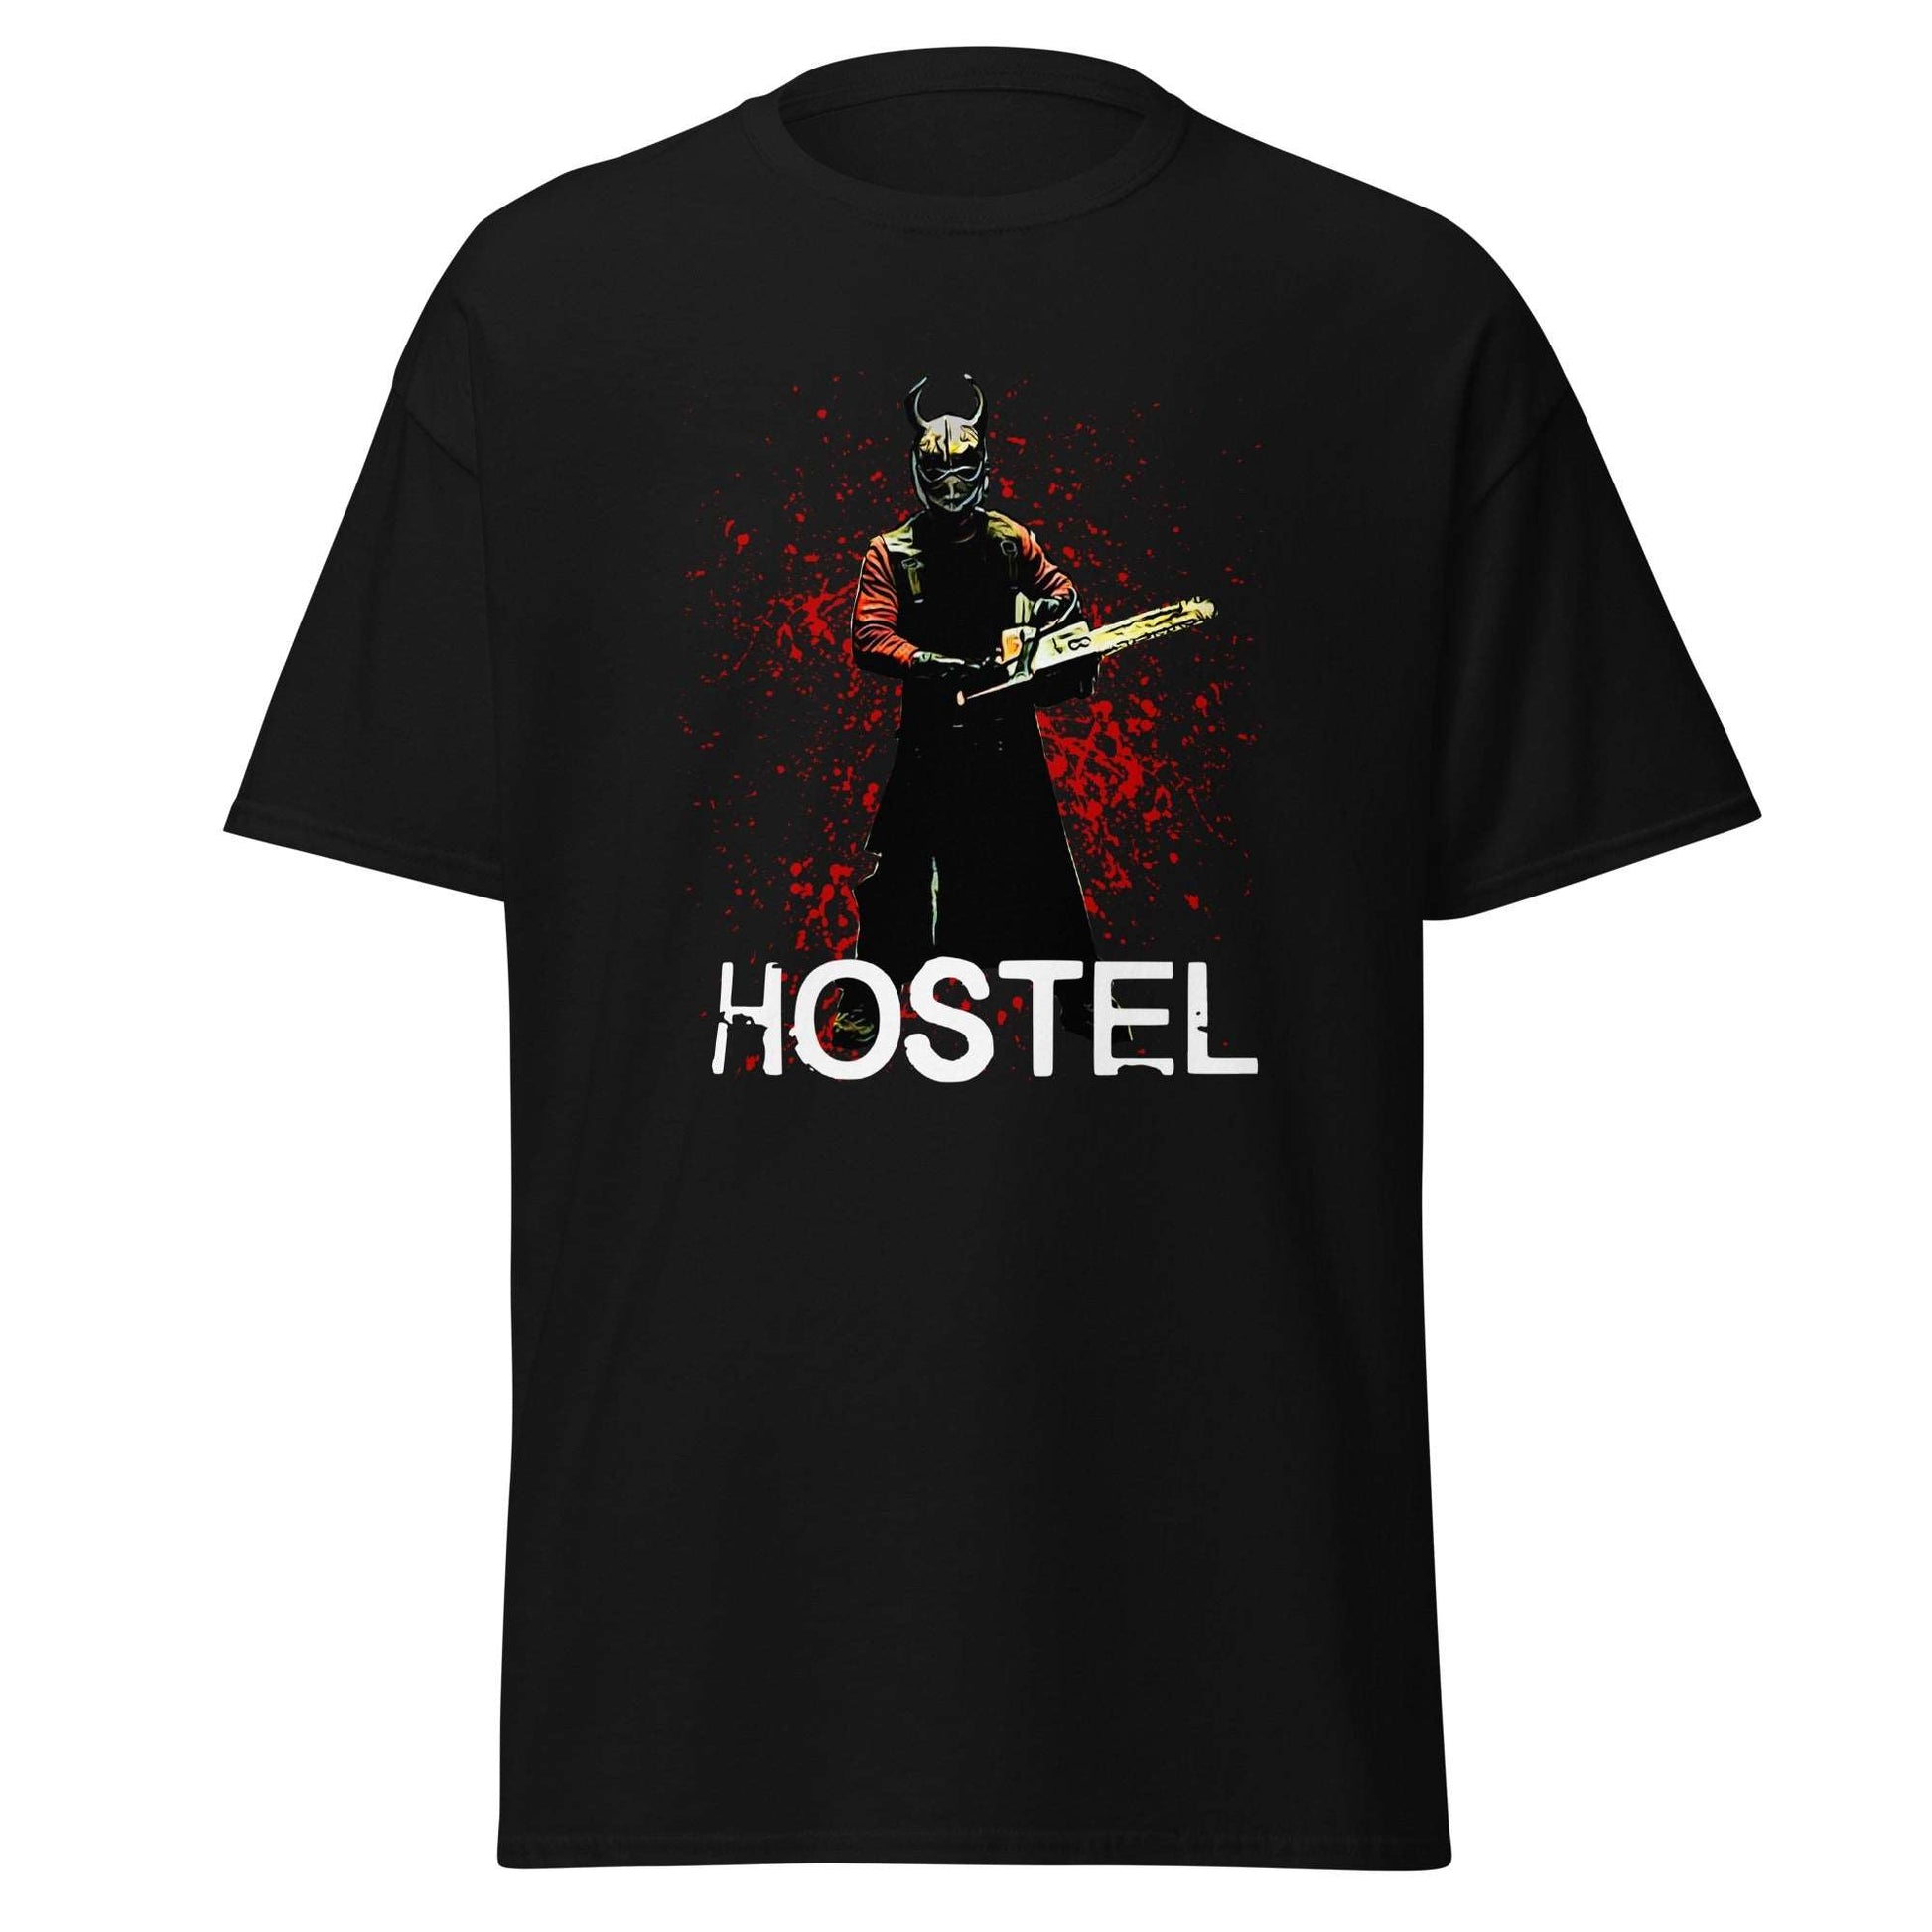 Hostel 90s Horror Movie Tee - Disturbing Film Shirt - thenightmareinc